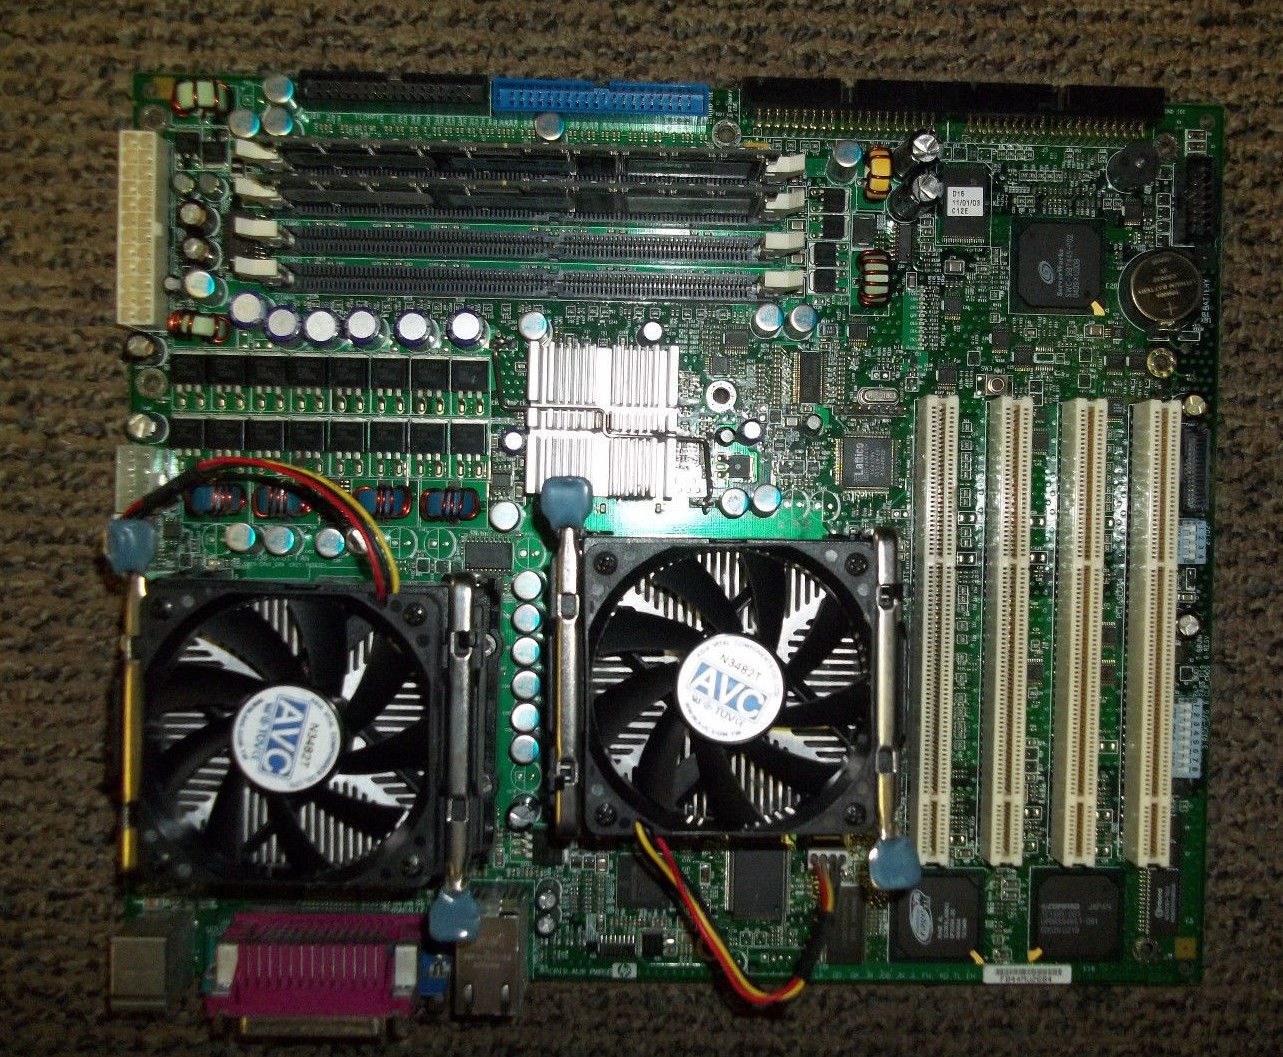 HP PROLIANT ML330 G3 324709-001 MOTHERBOARD with 1GB RAM, 2x SL6VN Intel  CPU, HS